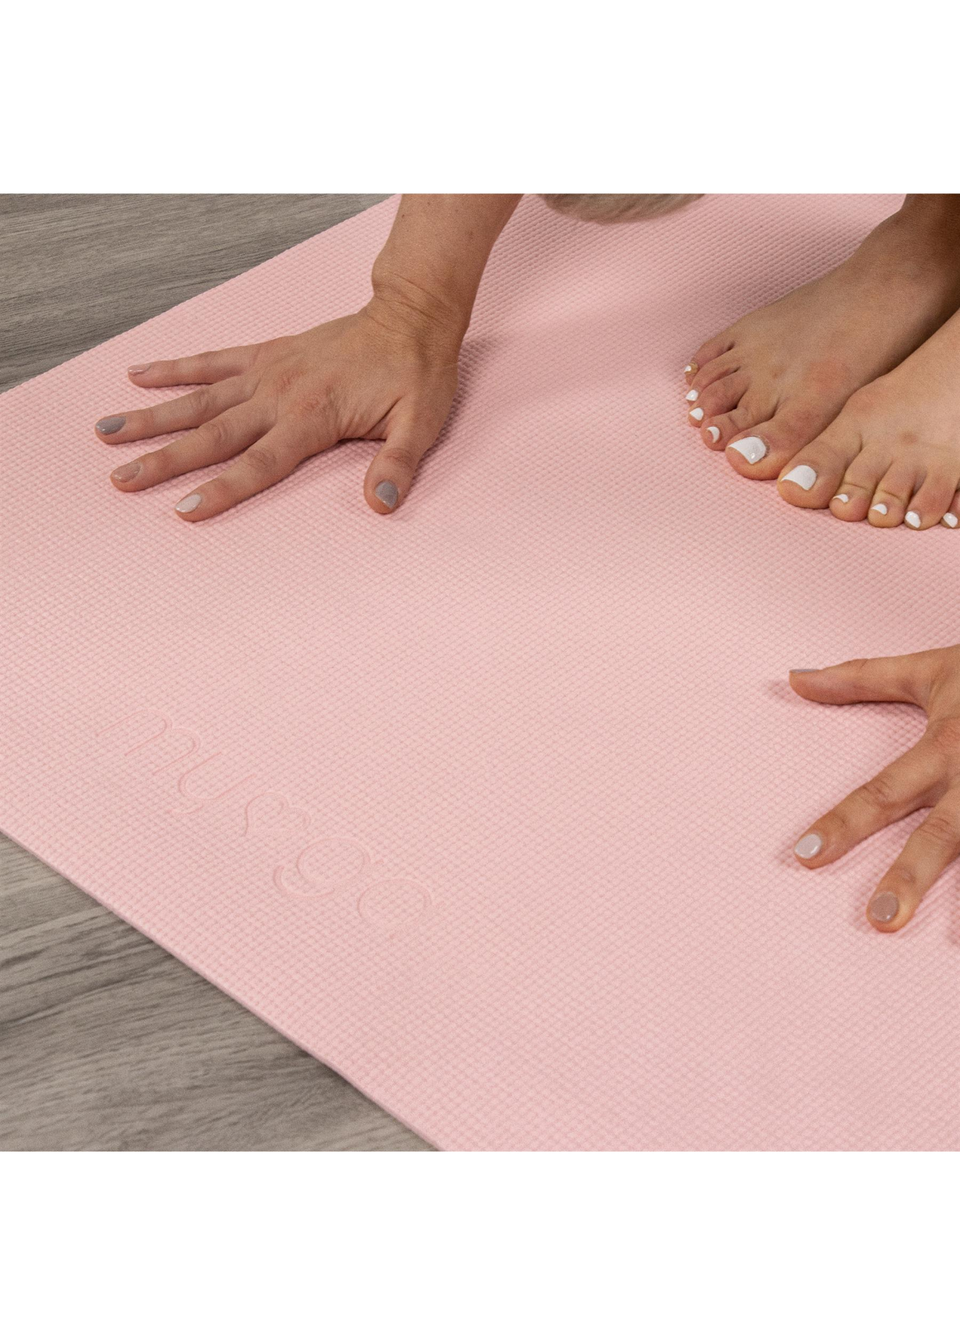 Myga Pink Yoga Mat